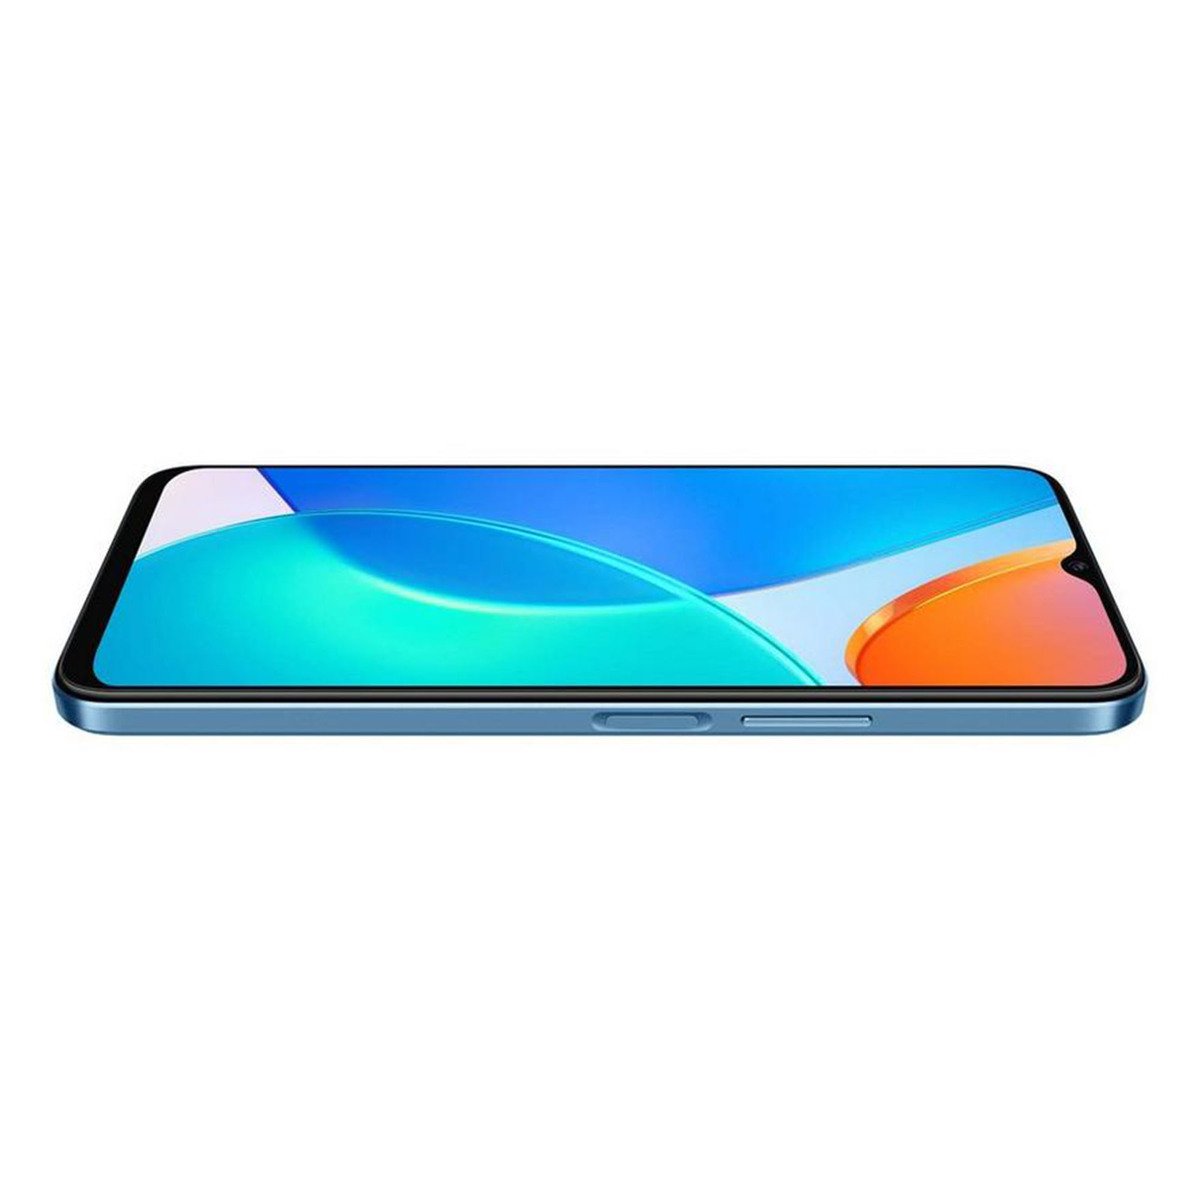 Honor Mobile X6 4GB 64GB 4G Ocean Blue